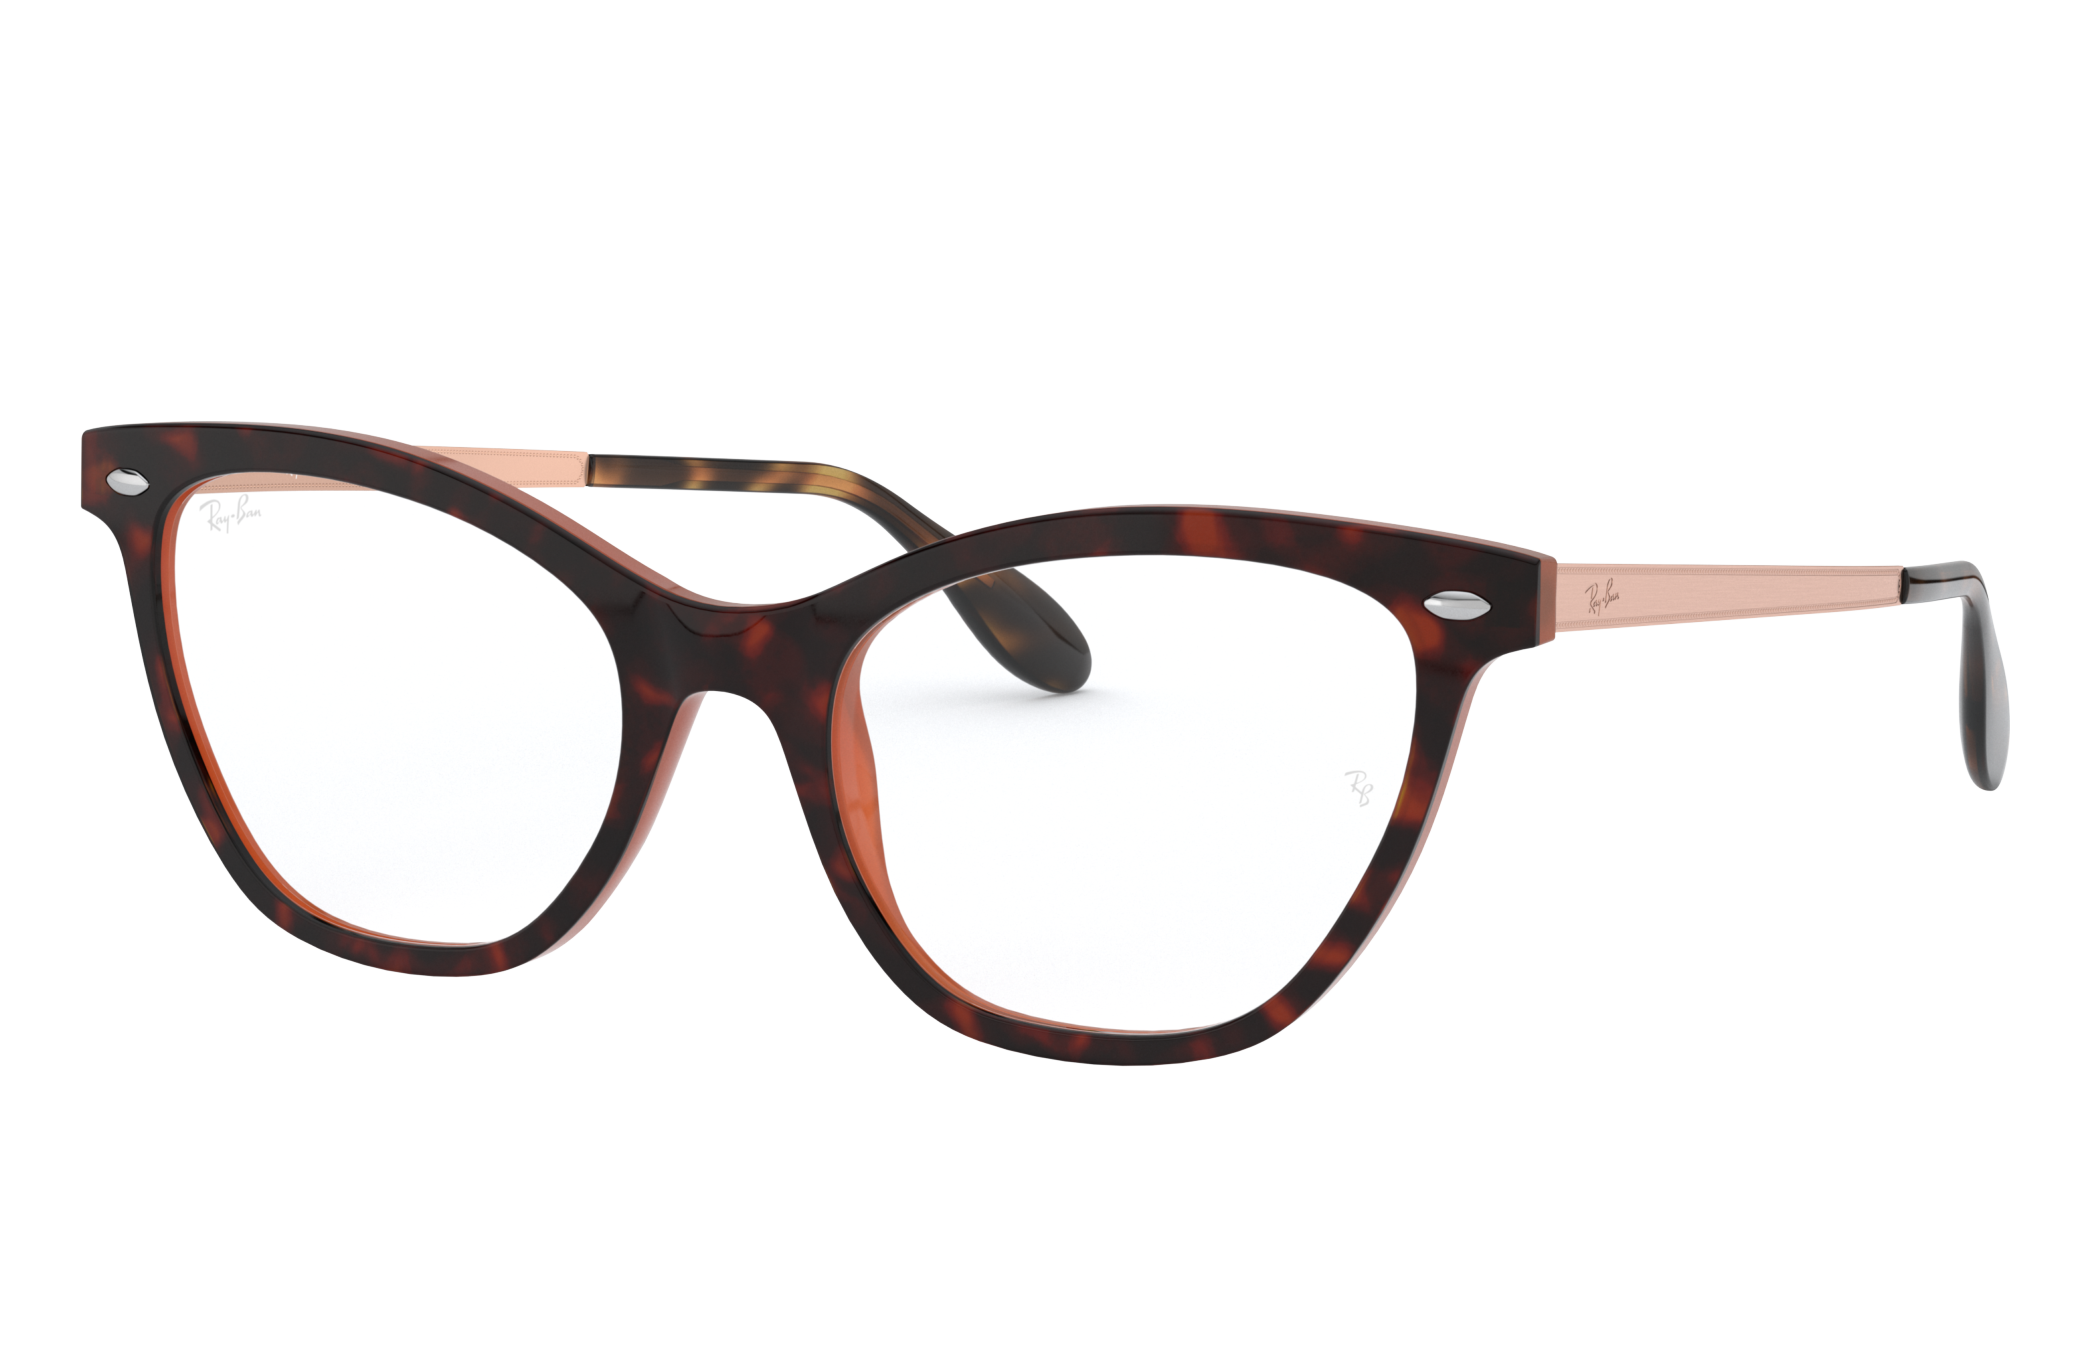 Rb5360 Eyeglasses with Tortoise Frame | Ray-Ban®